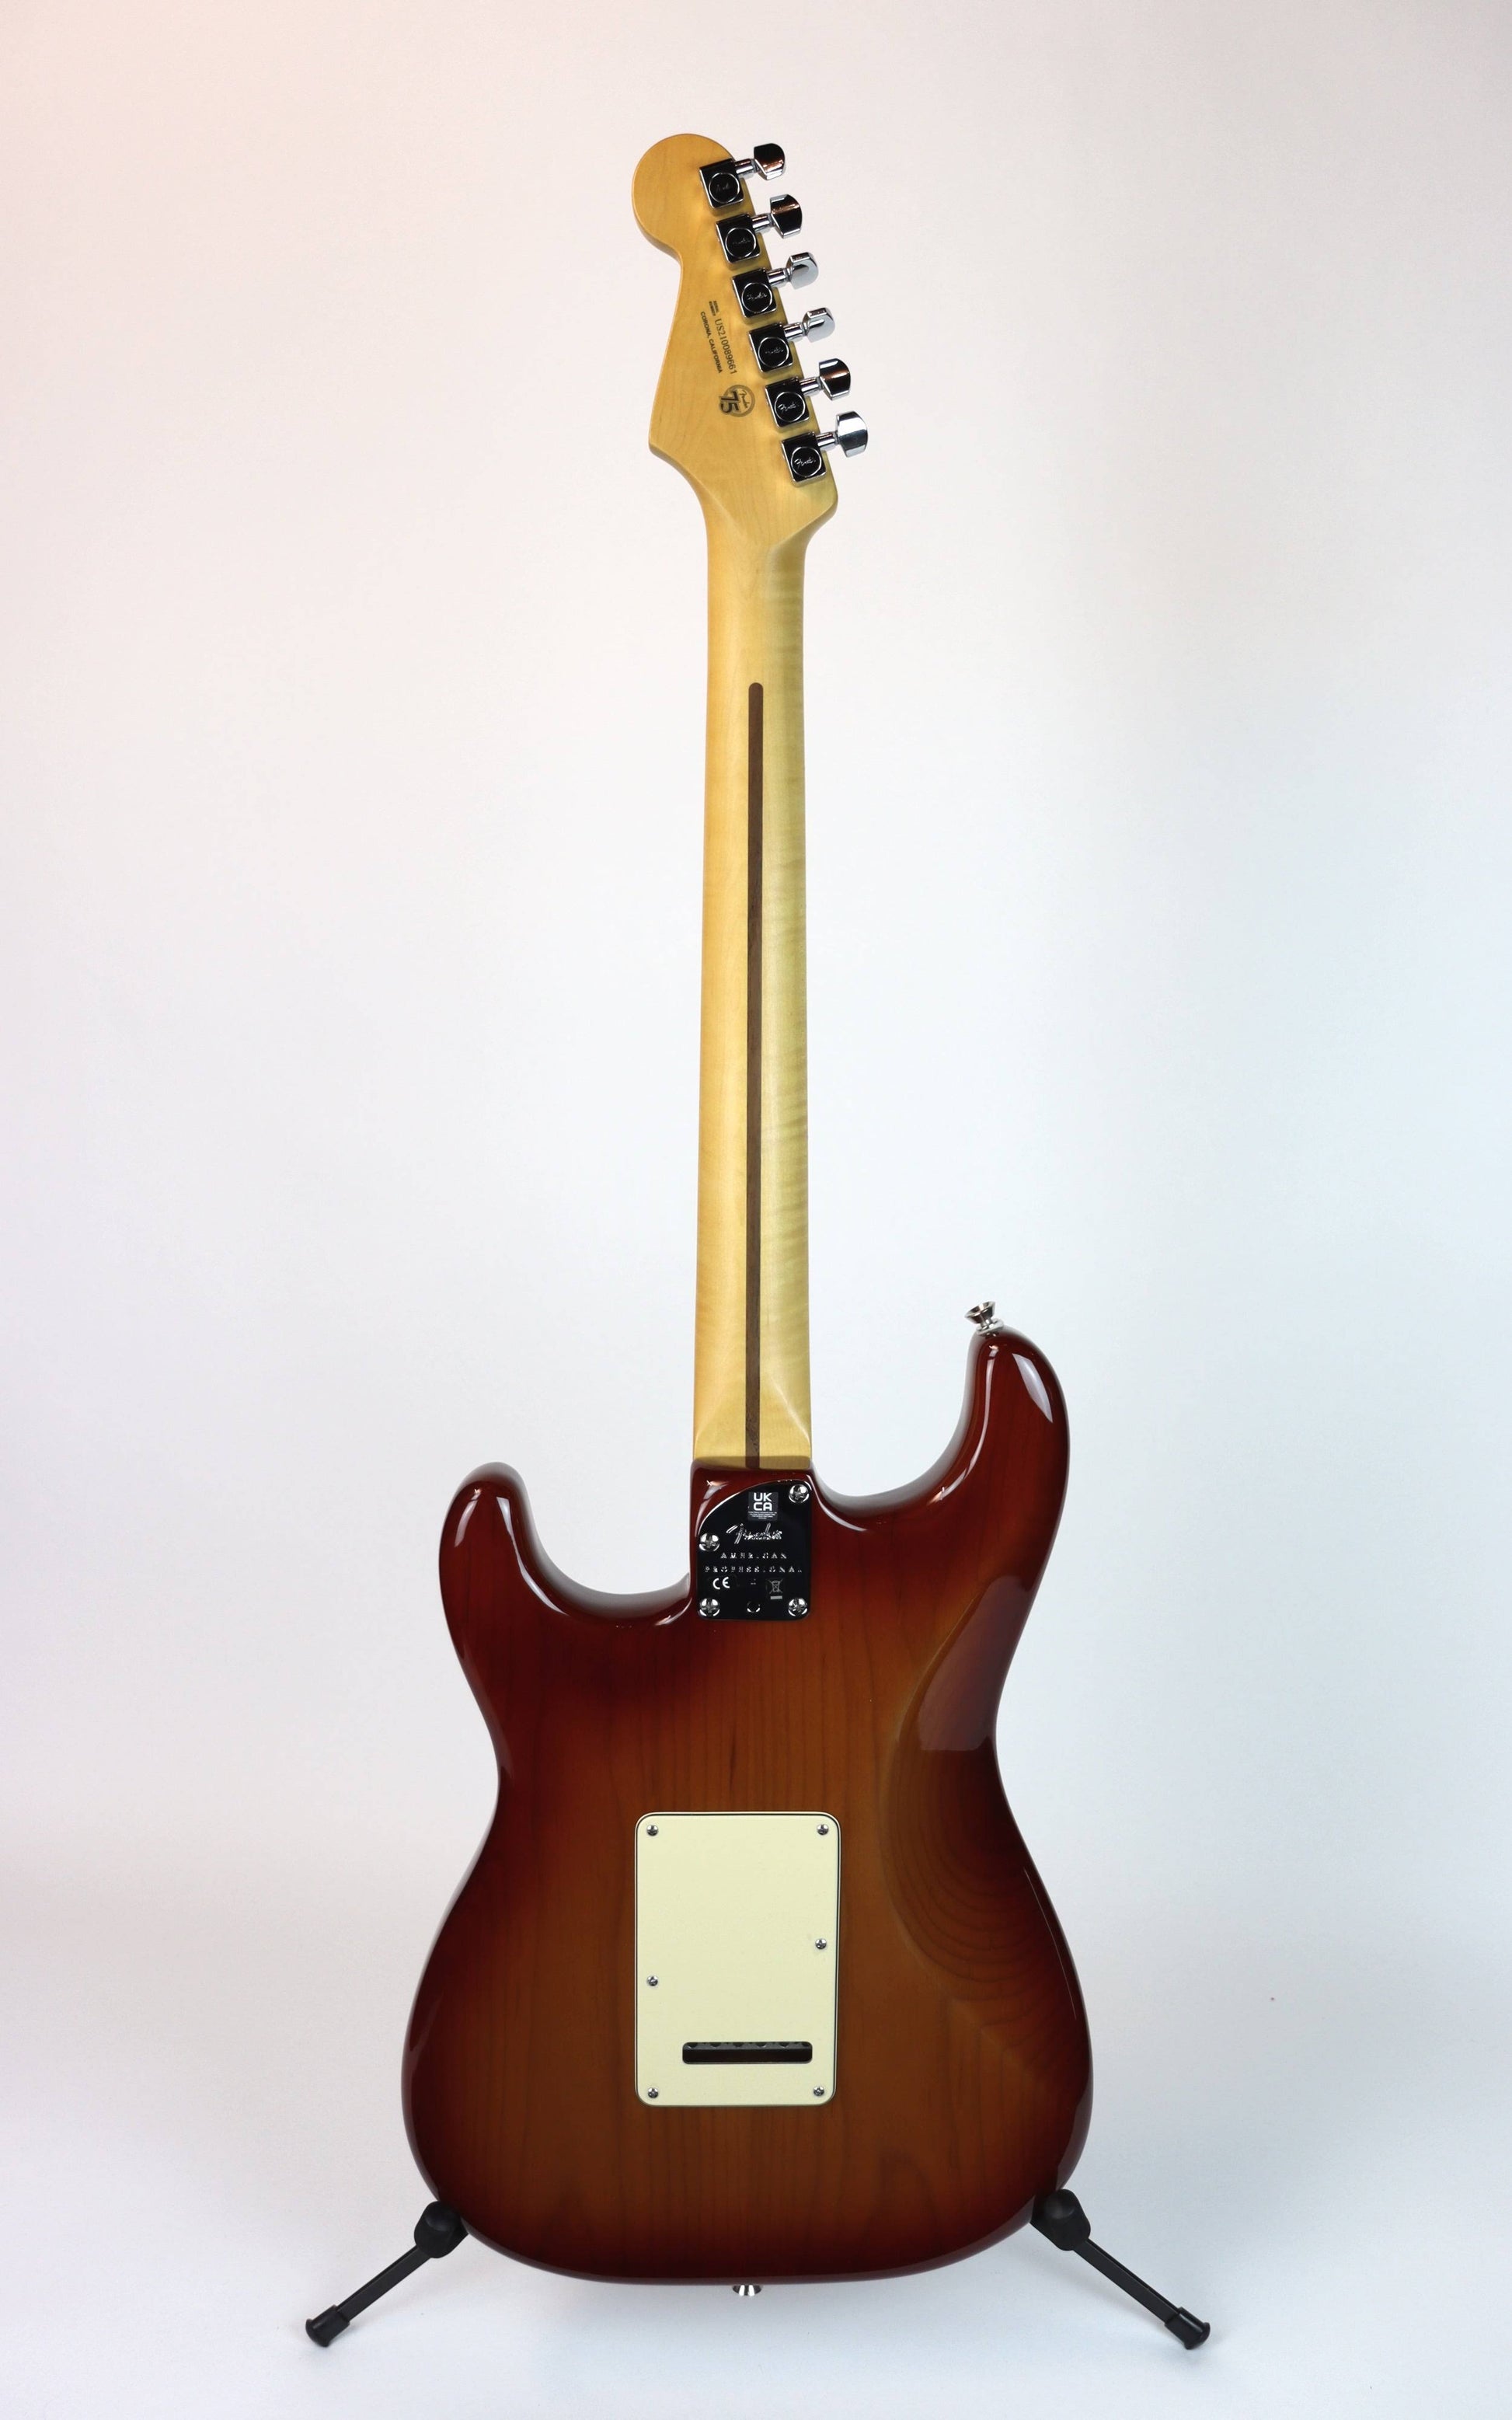 Fender American Professional II Stratocaster Maple, Sienna Sunburst